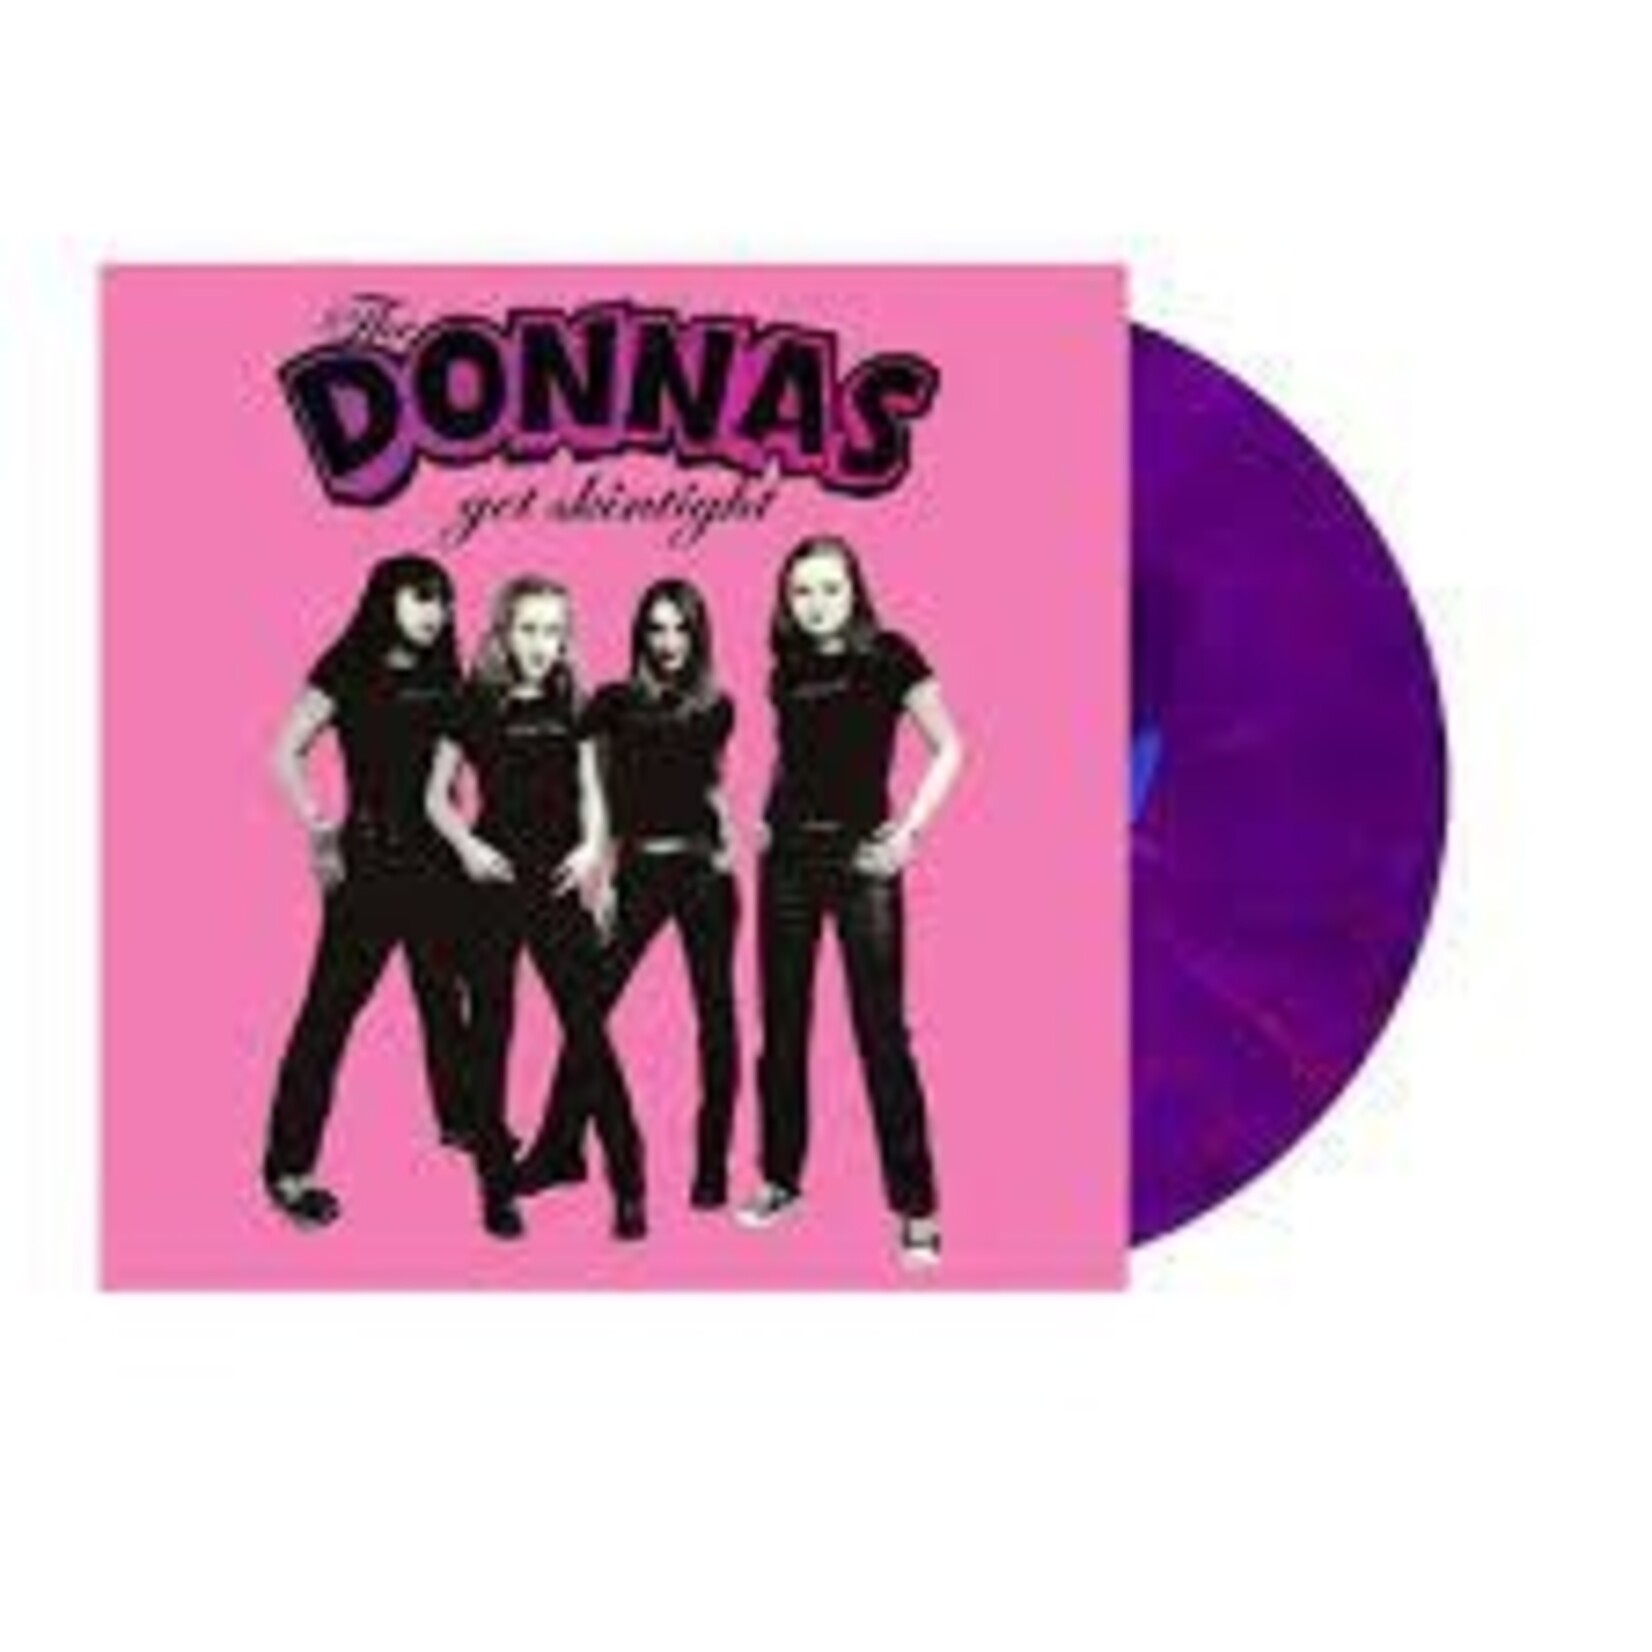 [New] Donnas - Get Skintight (remastered, purple vinyl with pink swirl)